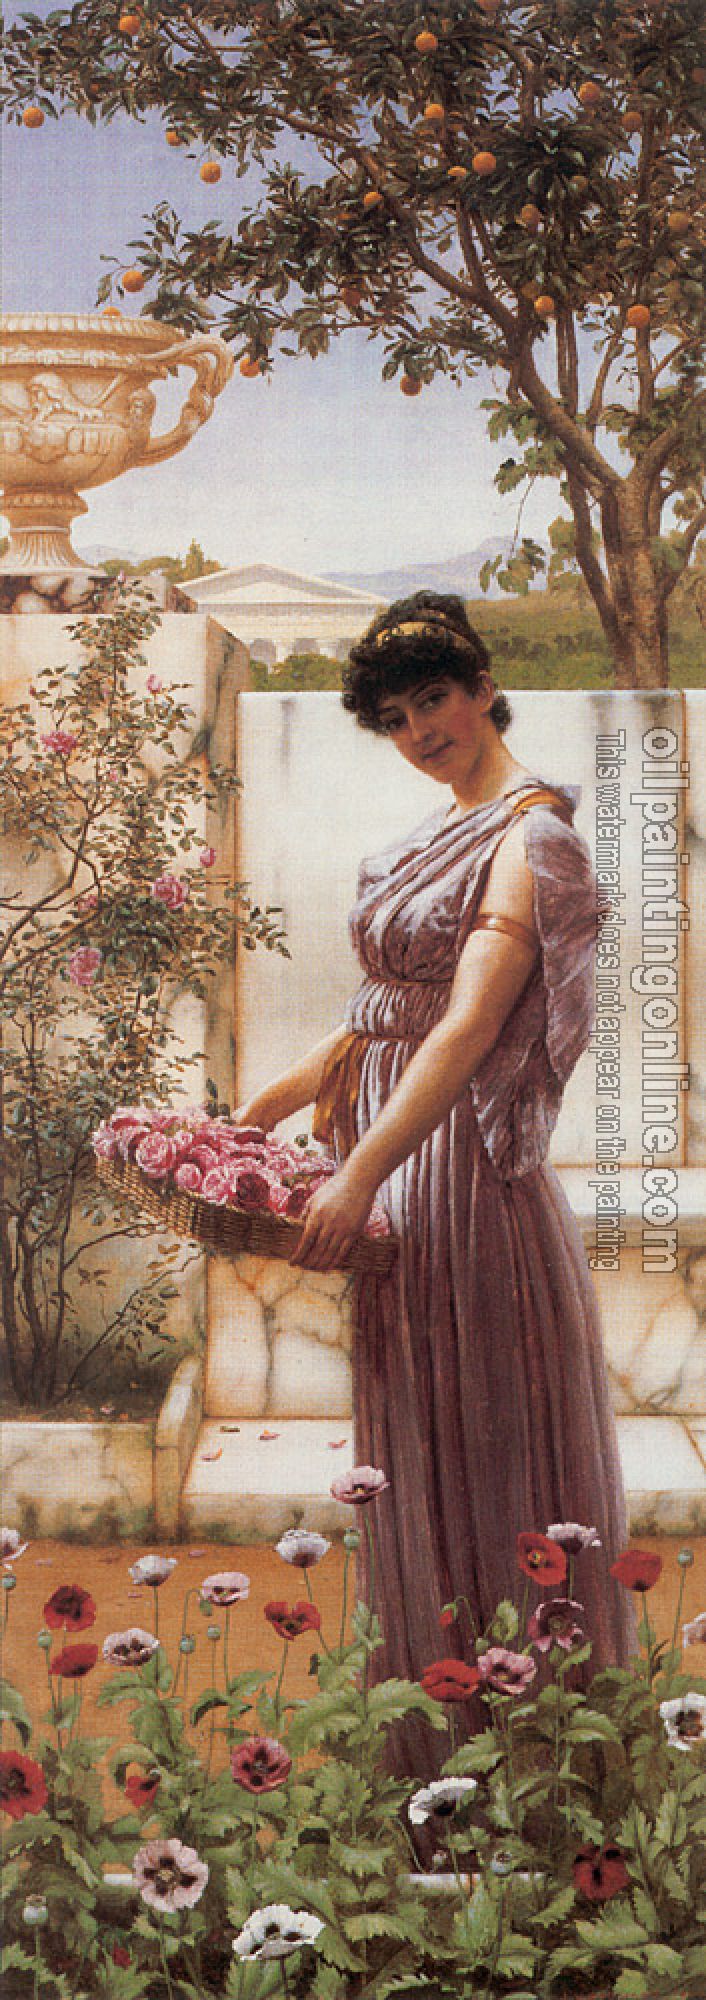 Godward, John William - The Flowers of Venus